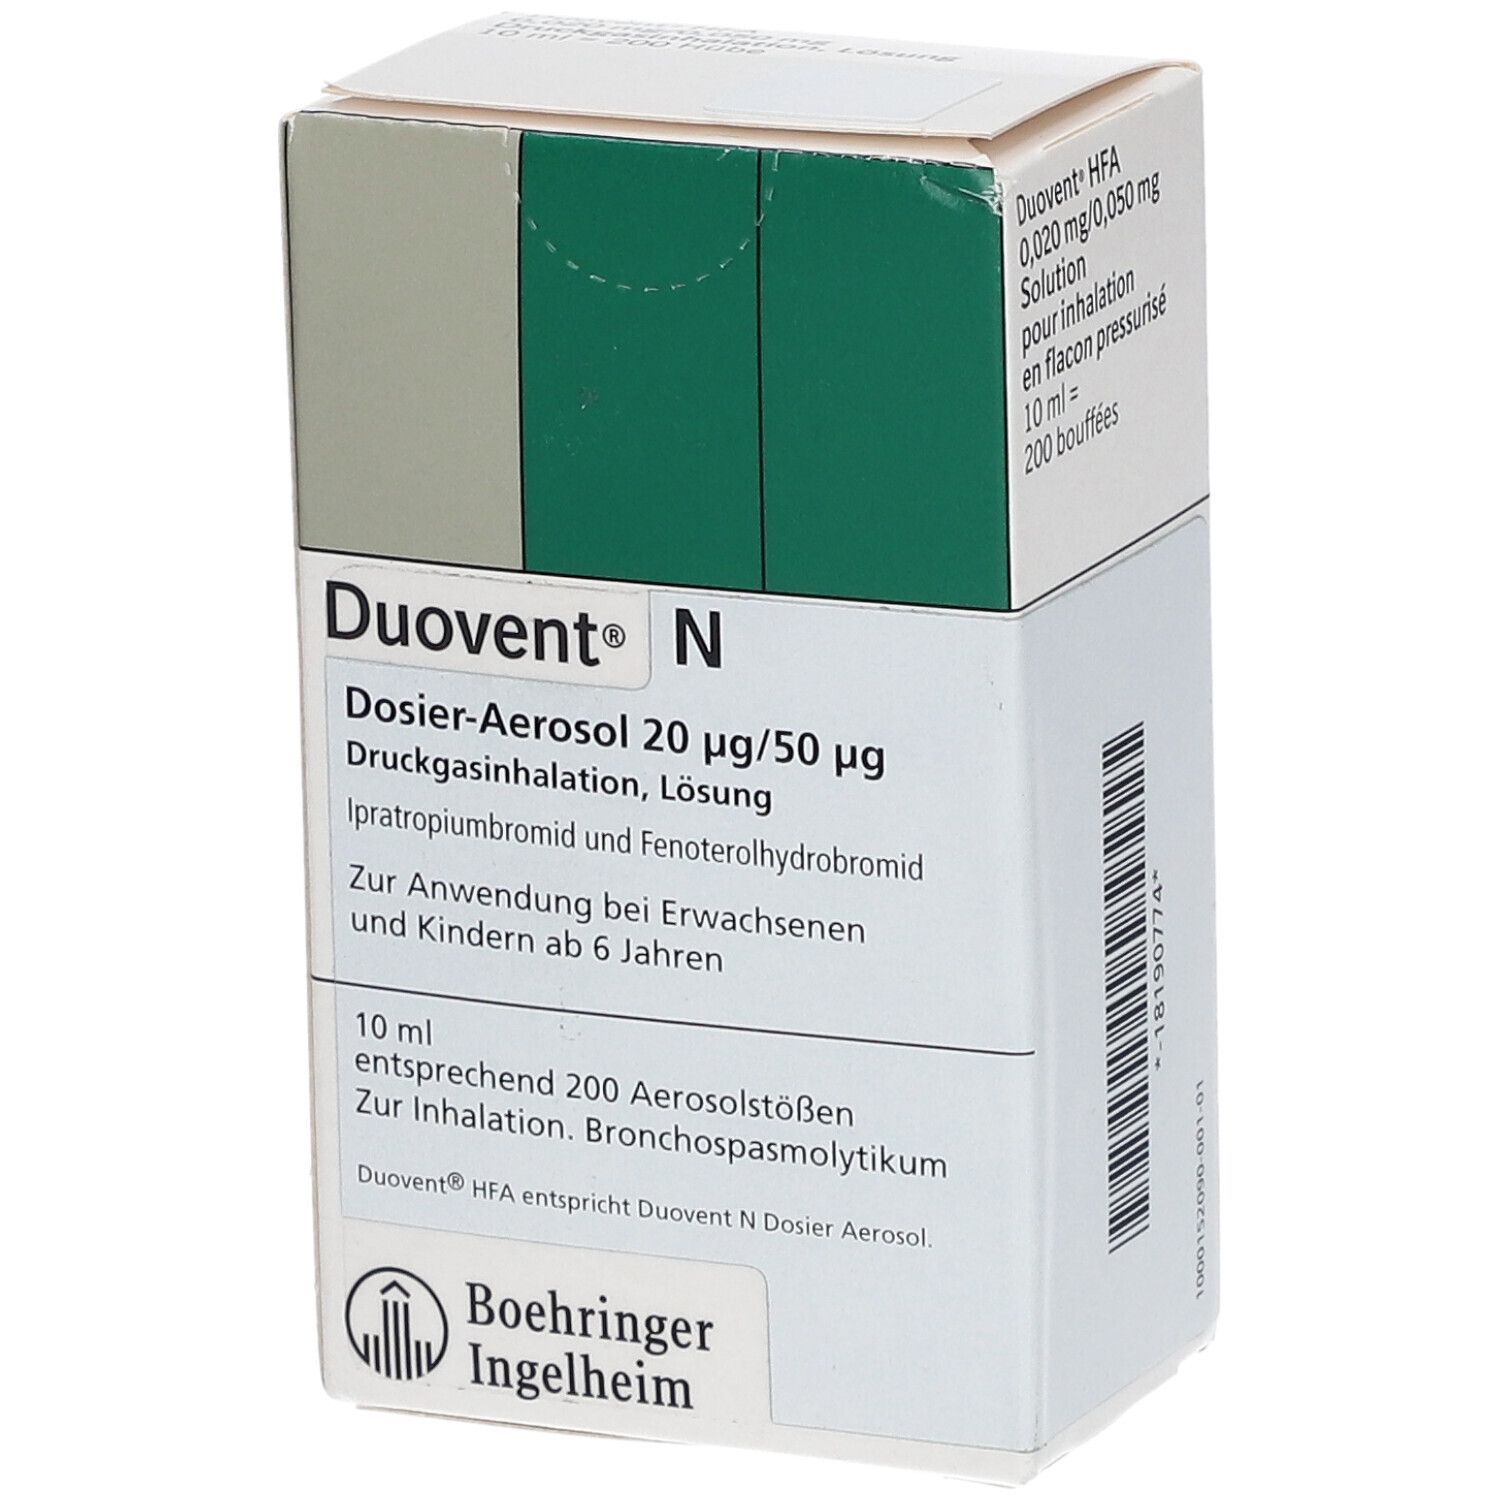 Duovent N Dosieraerosol 20 µg/50 µg